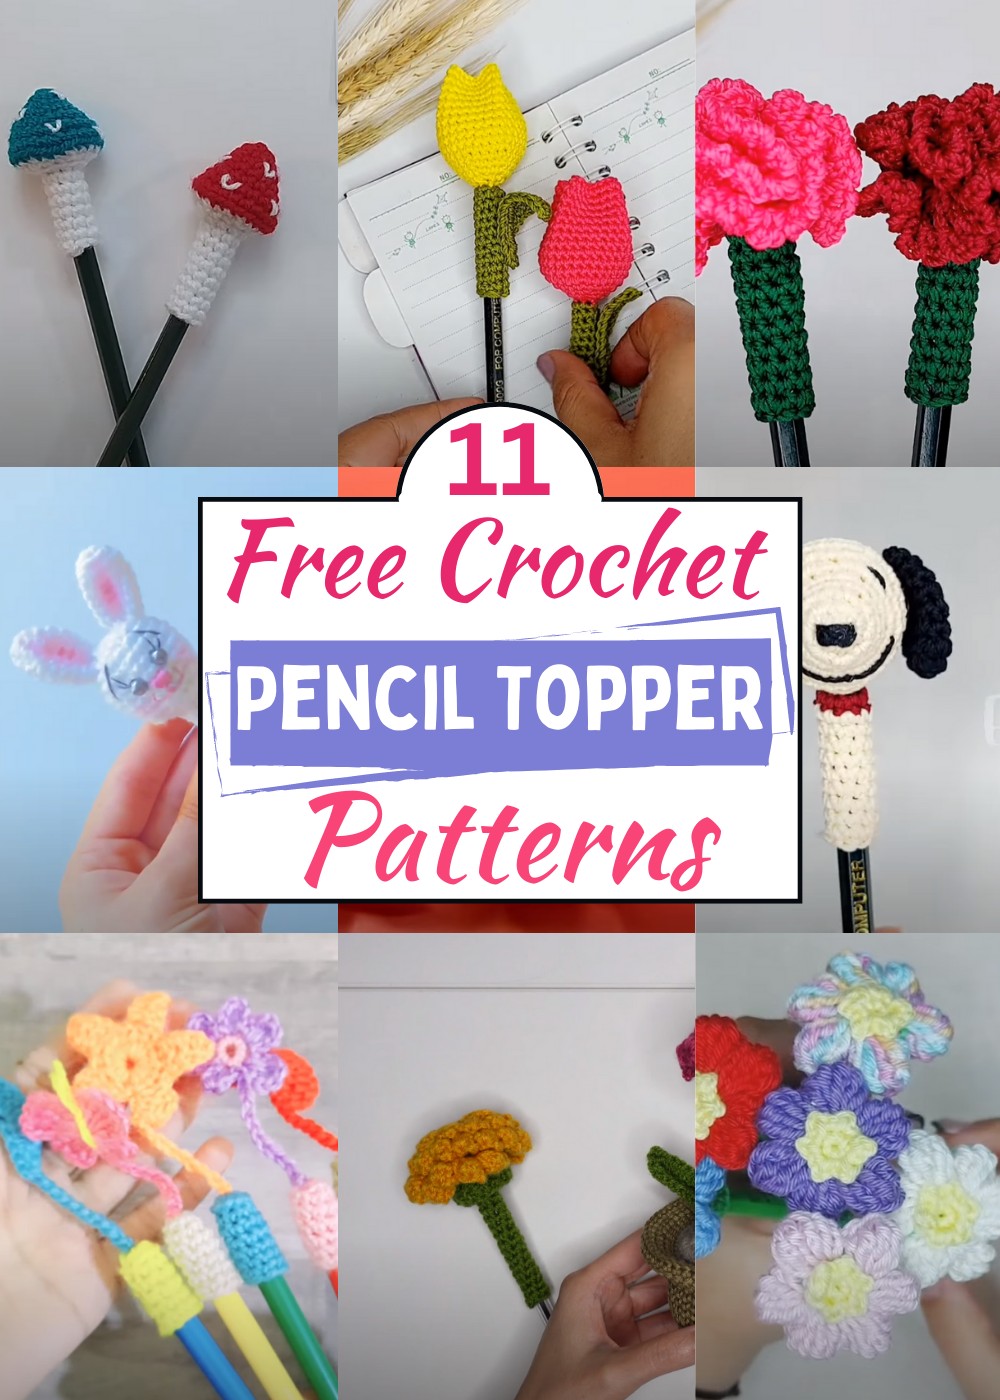 Crochet Pencil Topper Patterns